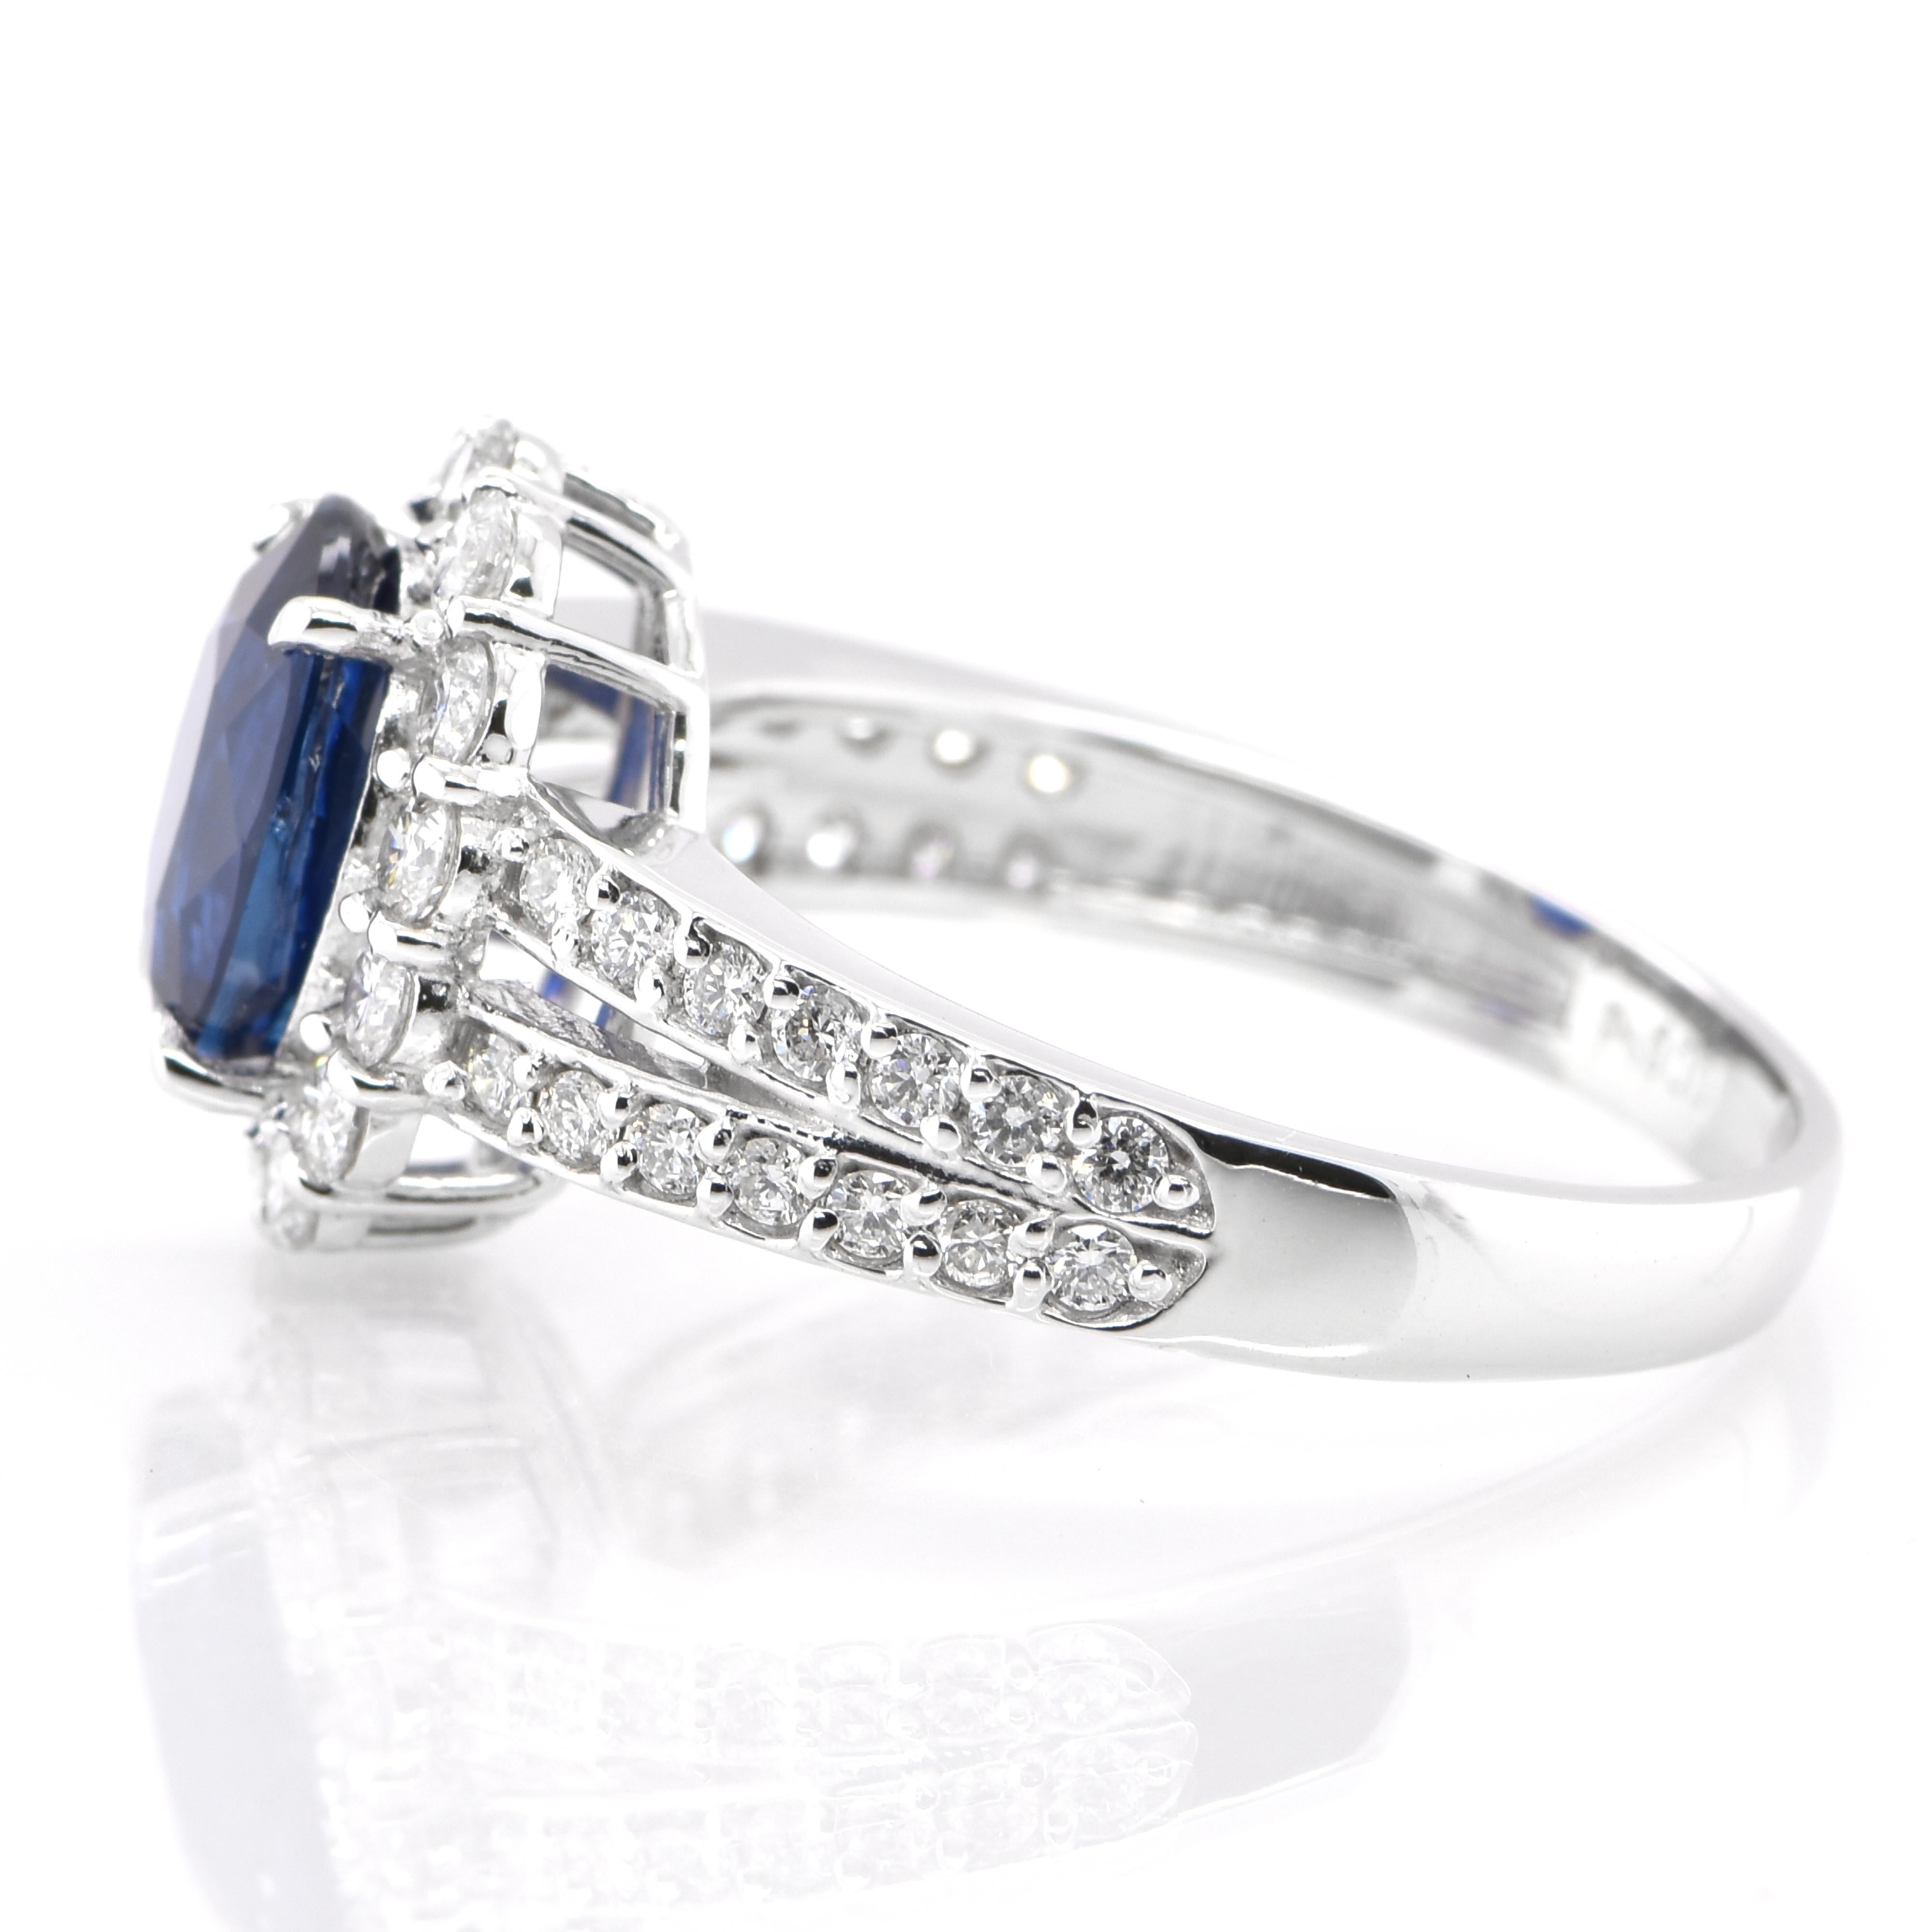 Oval Cut GIA Certified 2.02 Carat Natural Ceylon Sapphire & Diamond Ring Set in Platinum